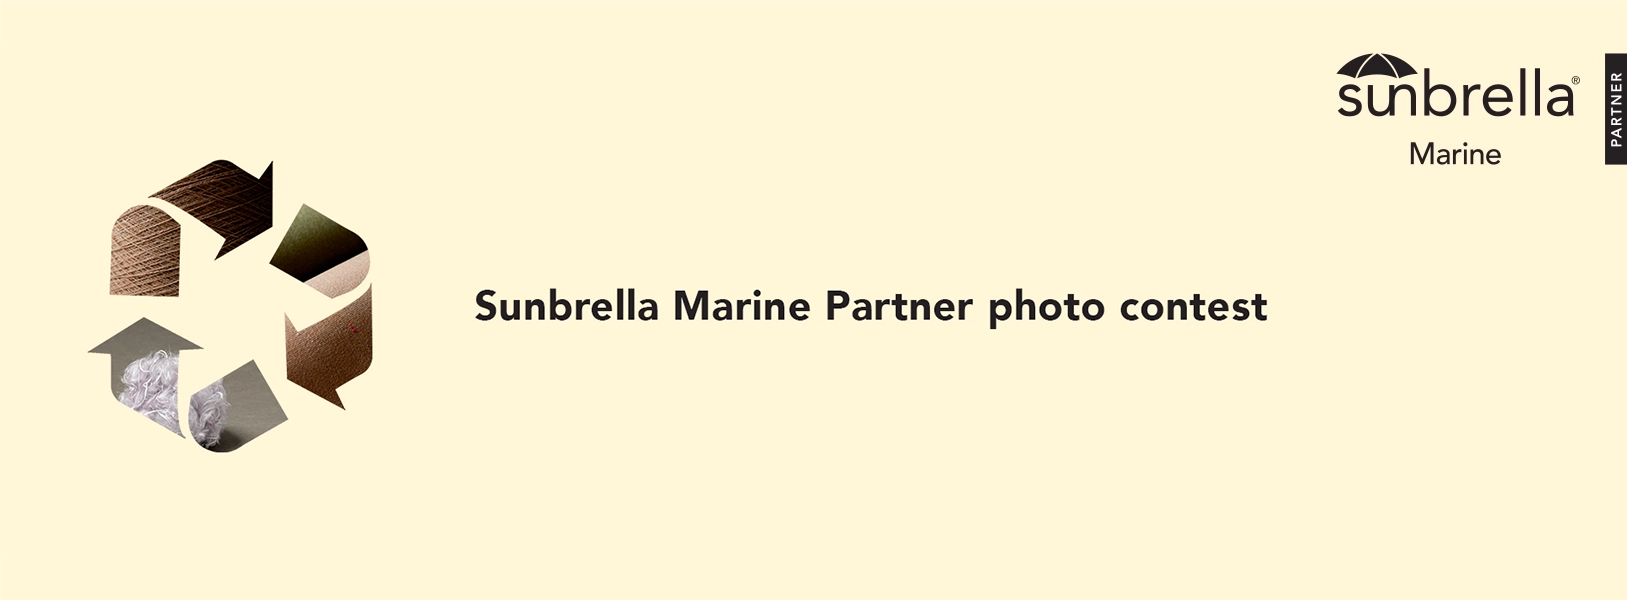 Concorso fotografico UPCYCLING per i partner Sunbrella Marine